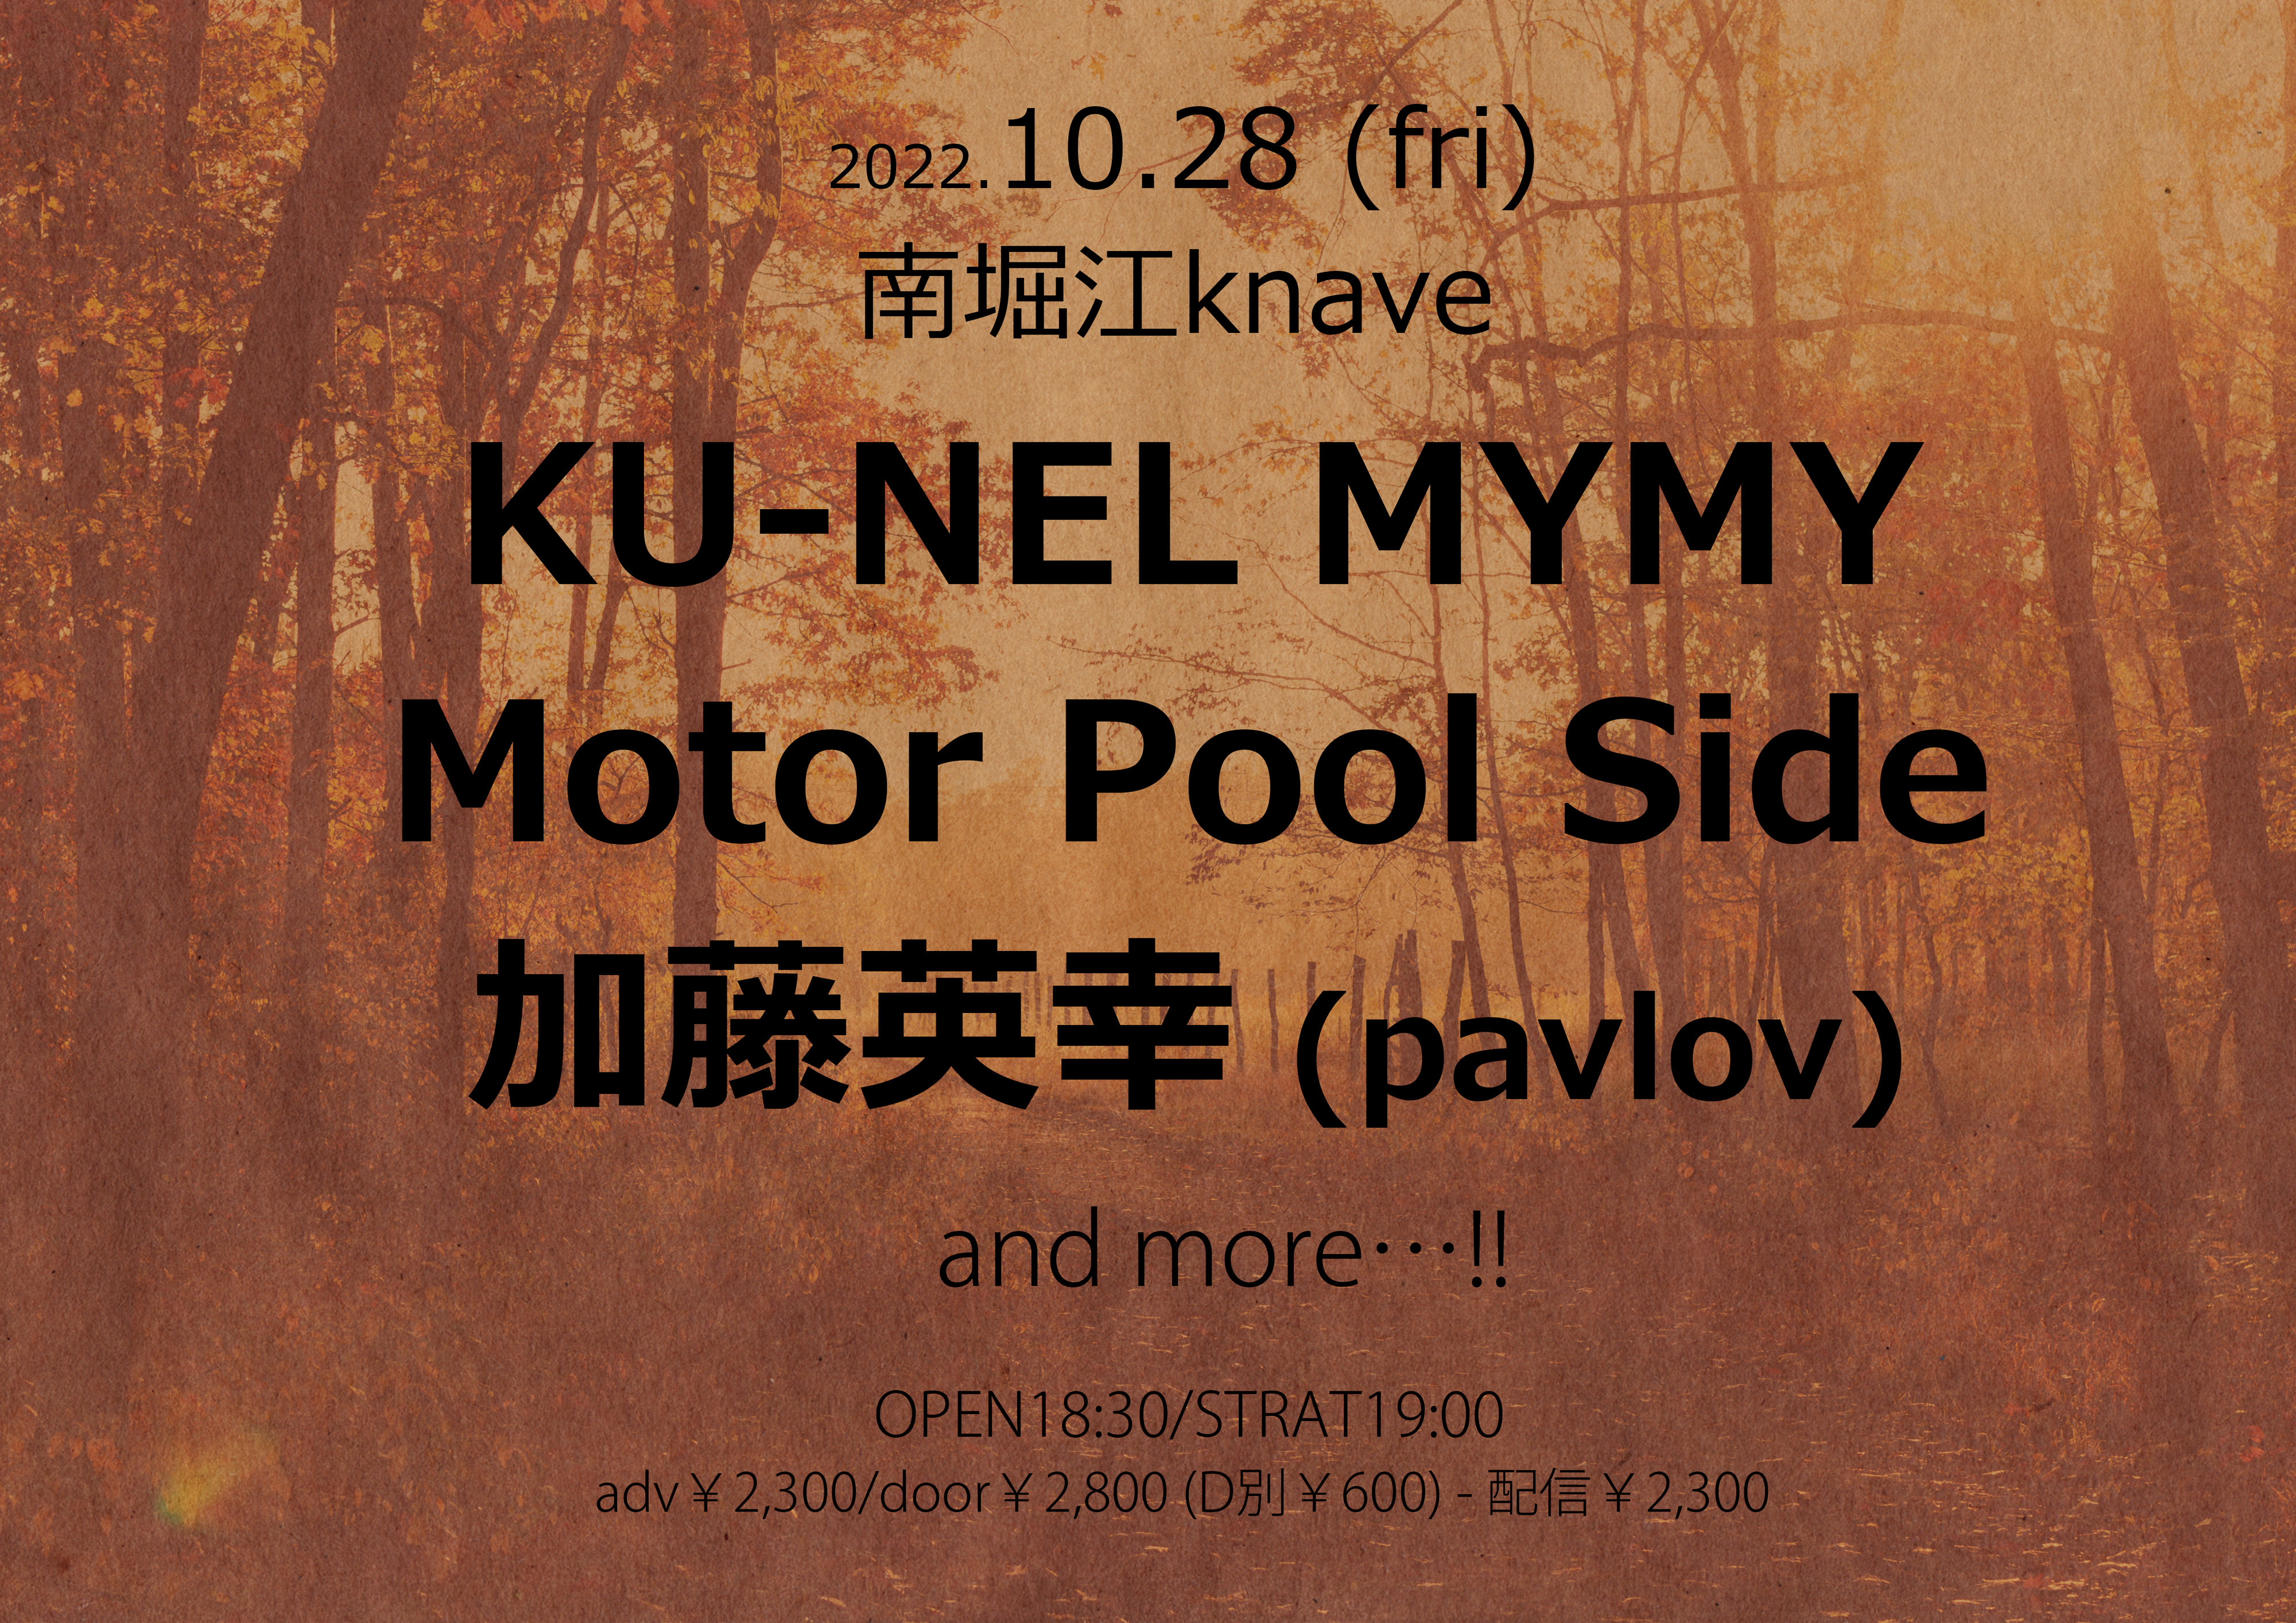 Motor Pool Side pavlov 南堀江Knave